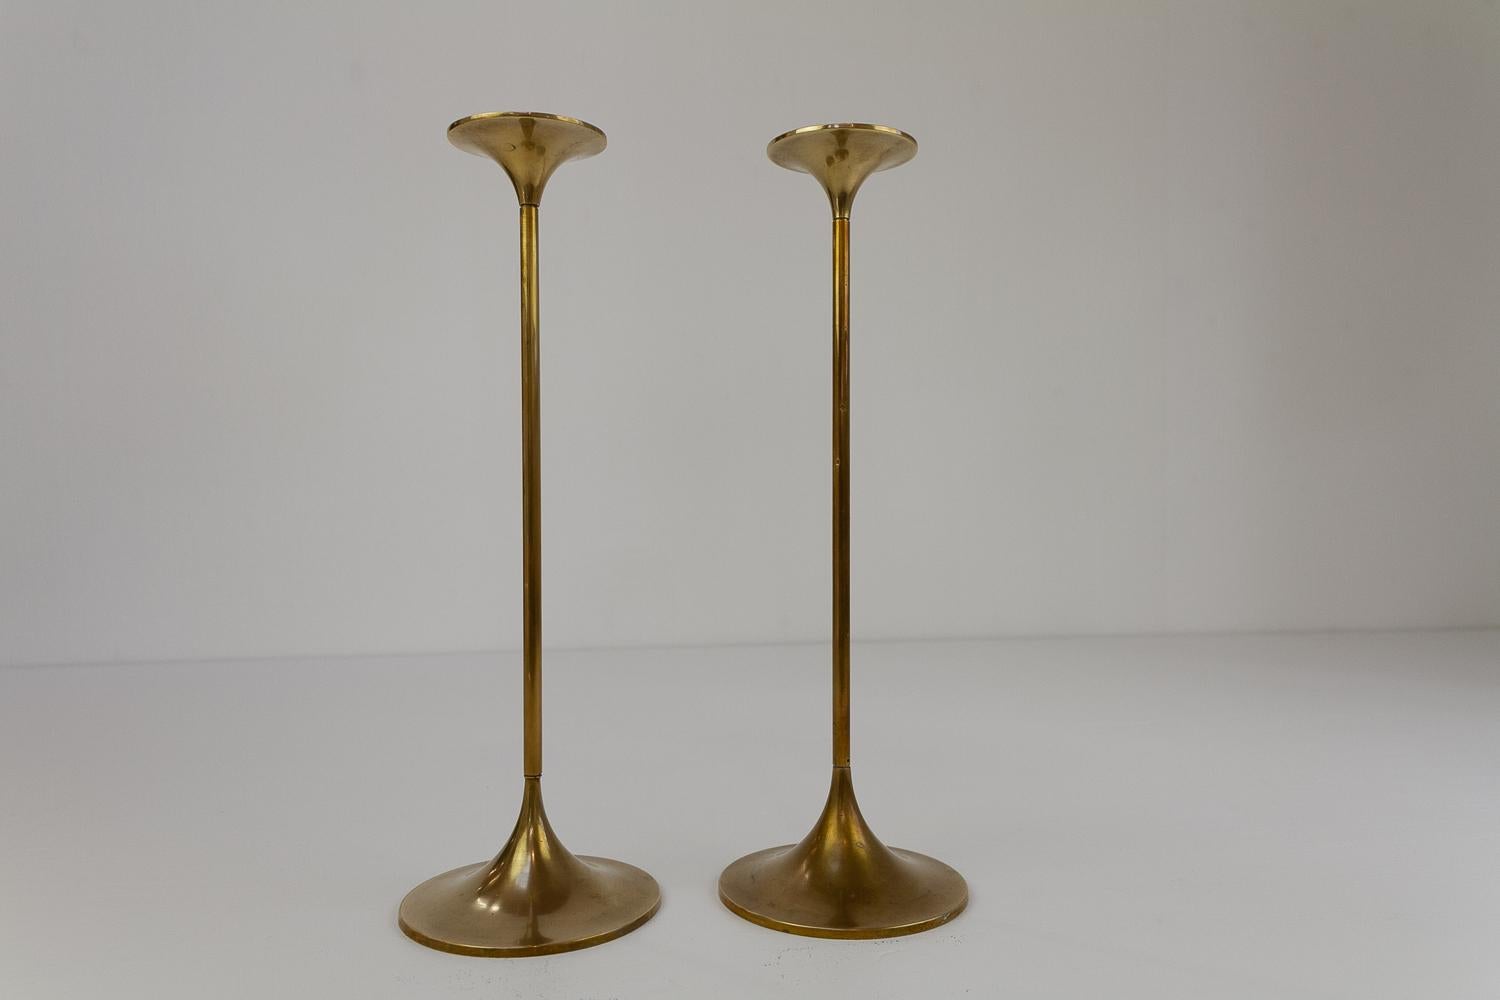 Vintage Danish Brass Candlesticks by Torben Ørskov 1960s. Set of 2.
Danish Mid-Century Modern pair of beautifully patinated 